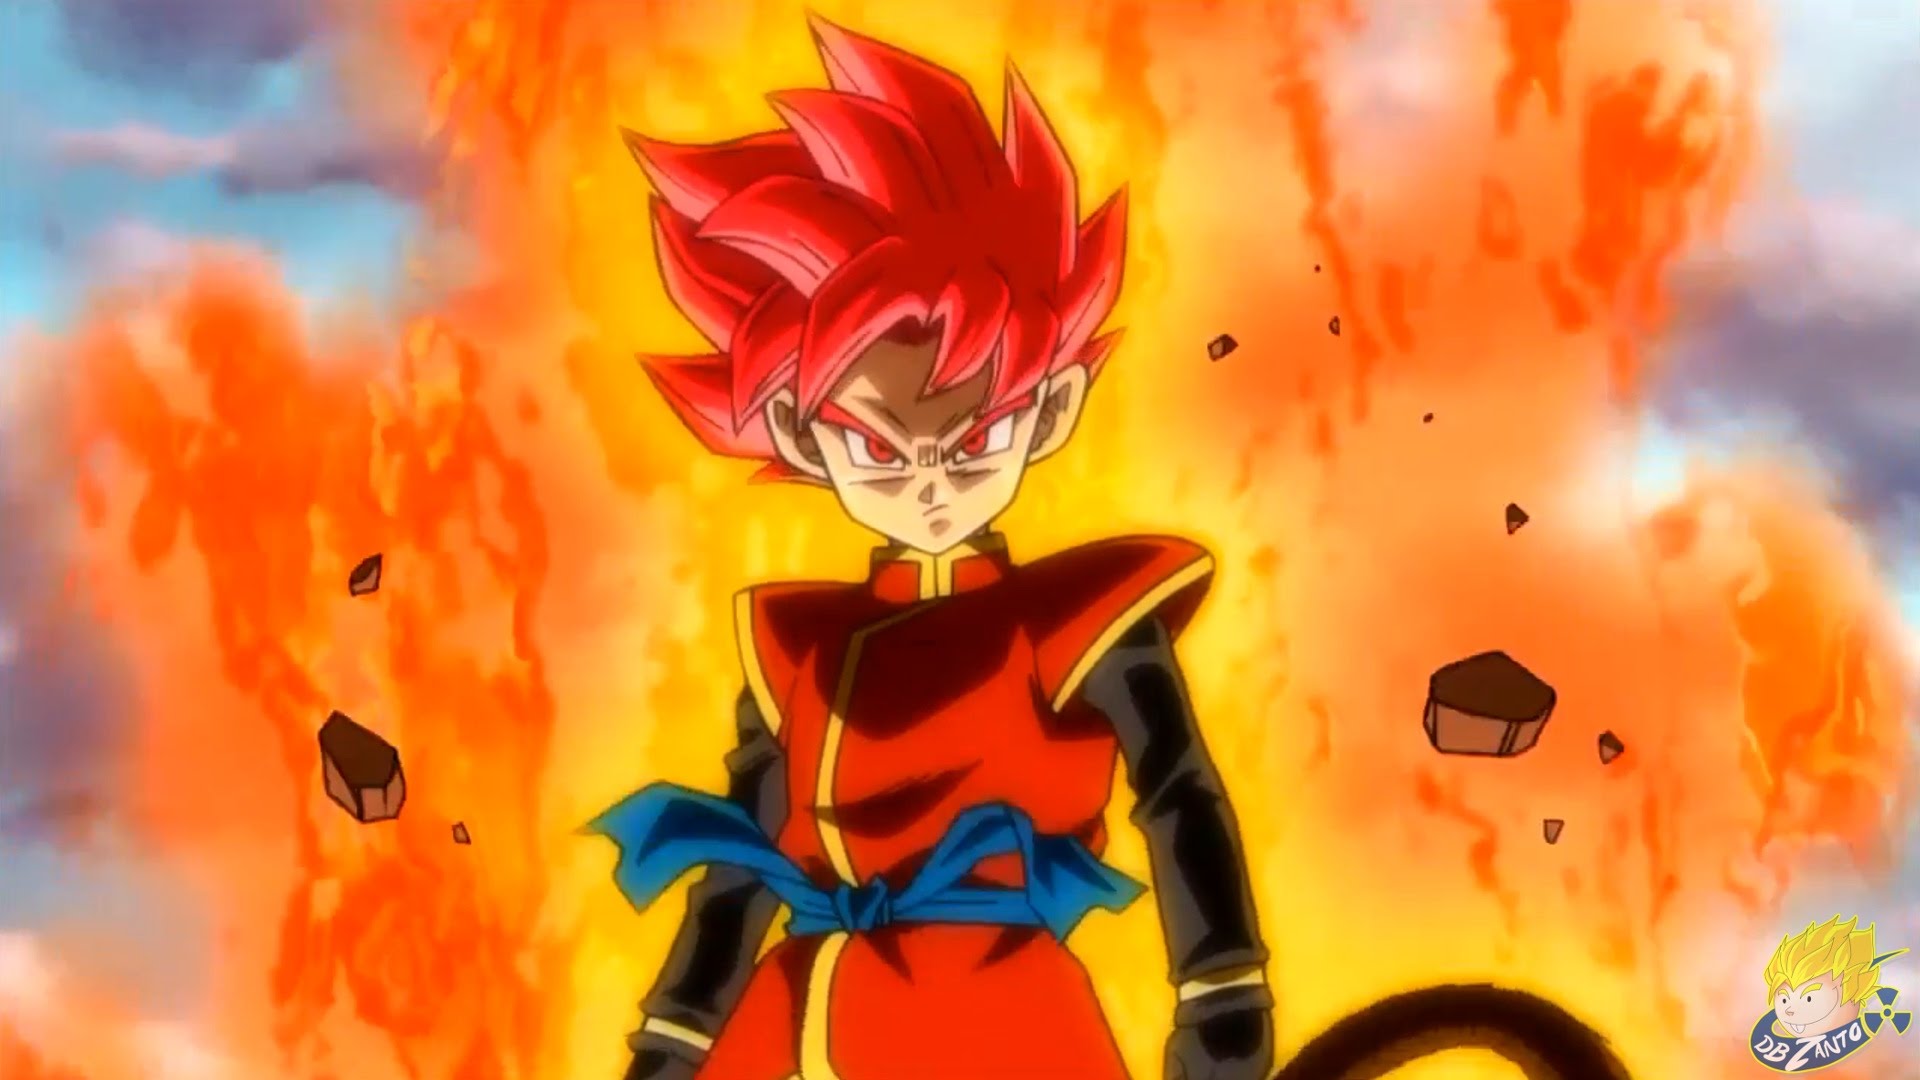 Anime 1920x1080 Dragon Ball Z Kai anime boys anime redhead Super Saiyan God Super Saiyan fire red eyes